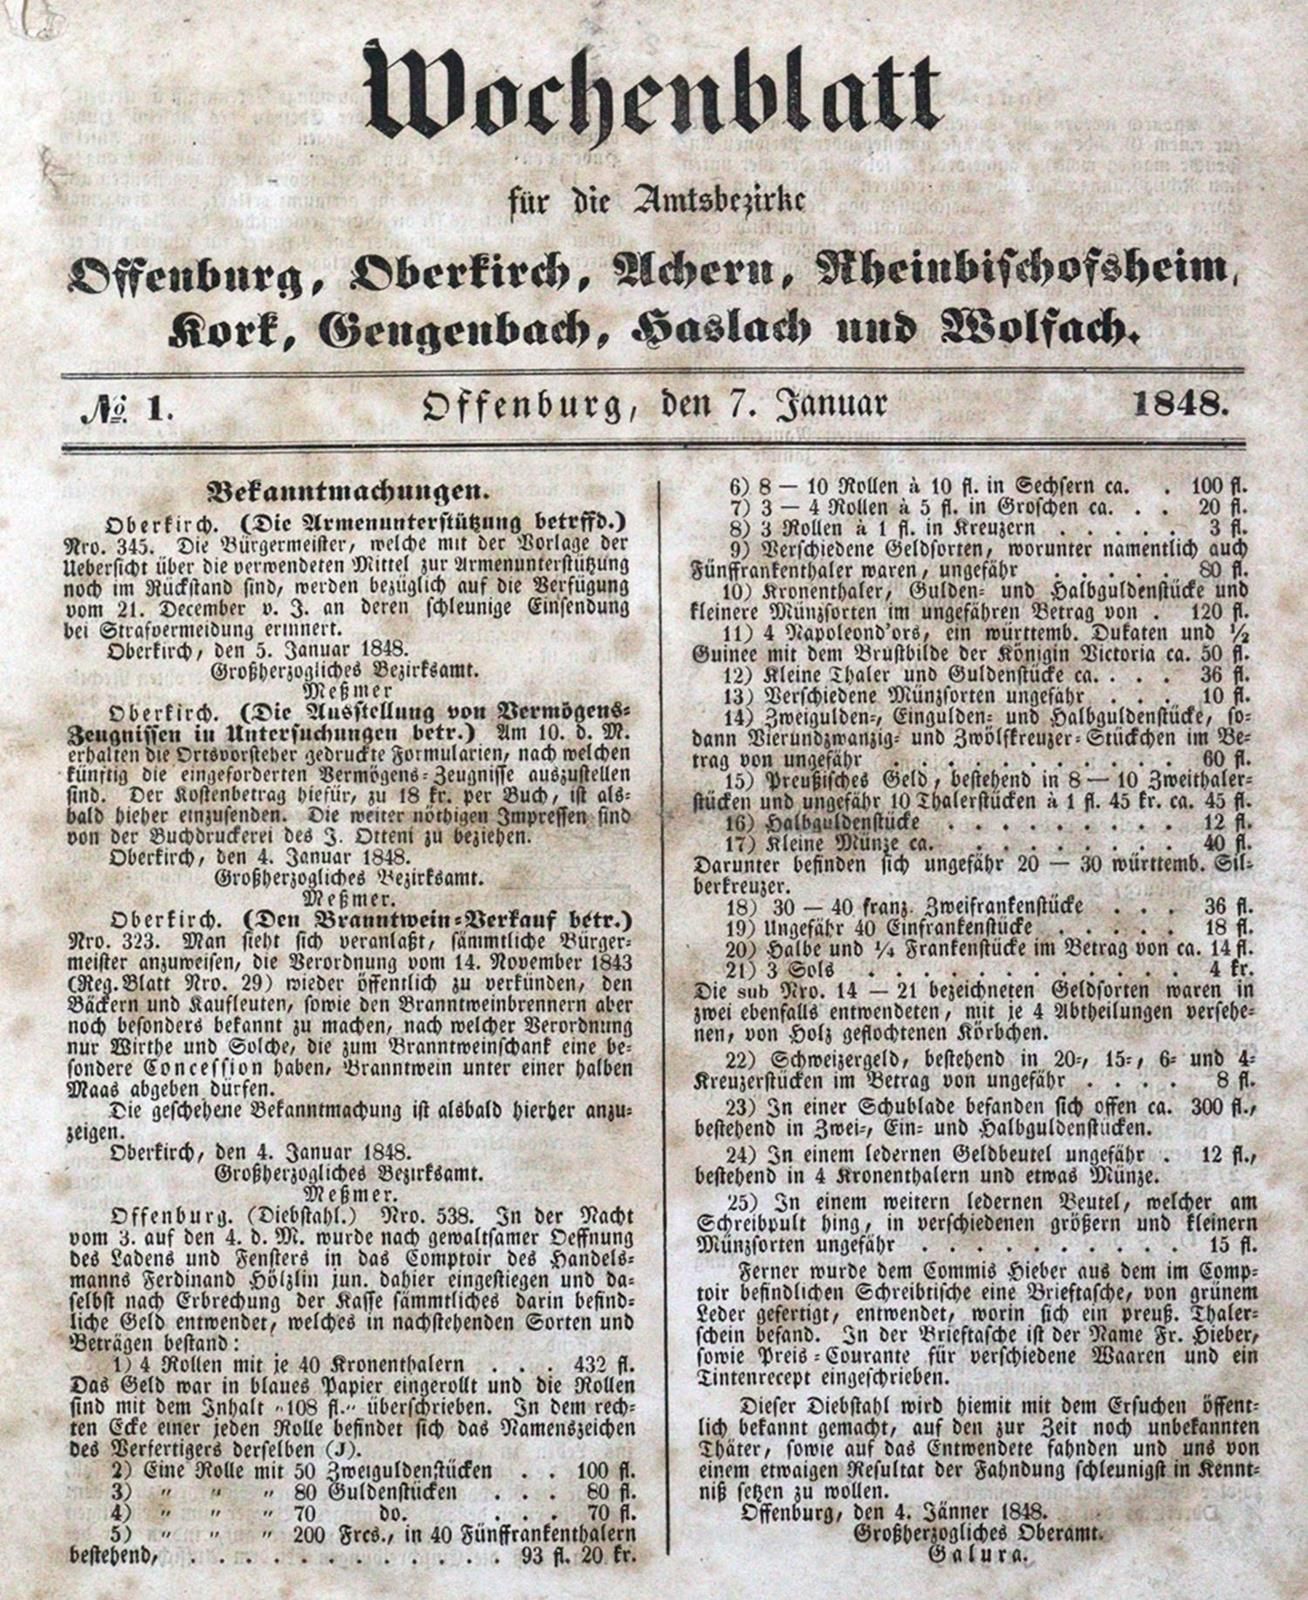 Wochenblatt per i distretti di Offenburg, Oberkirch, Achern, Rheinbischofsheim, &hellip;